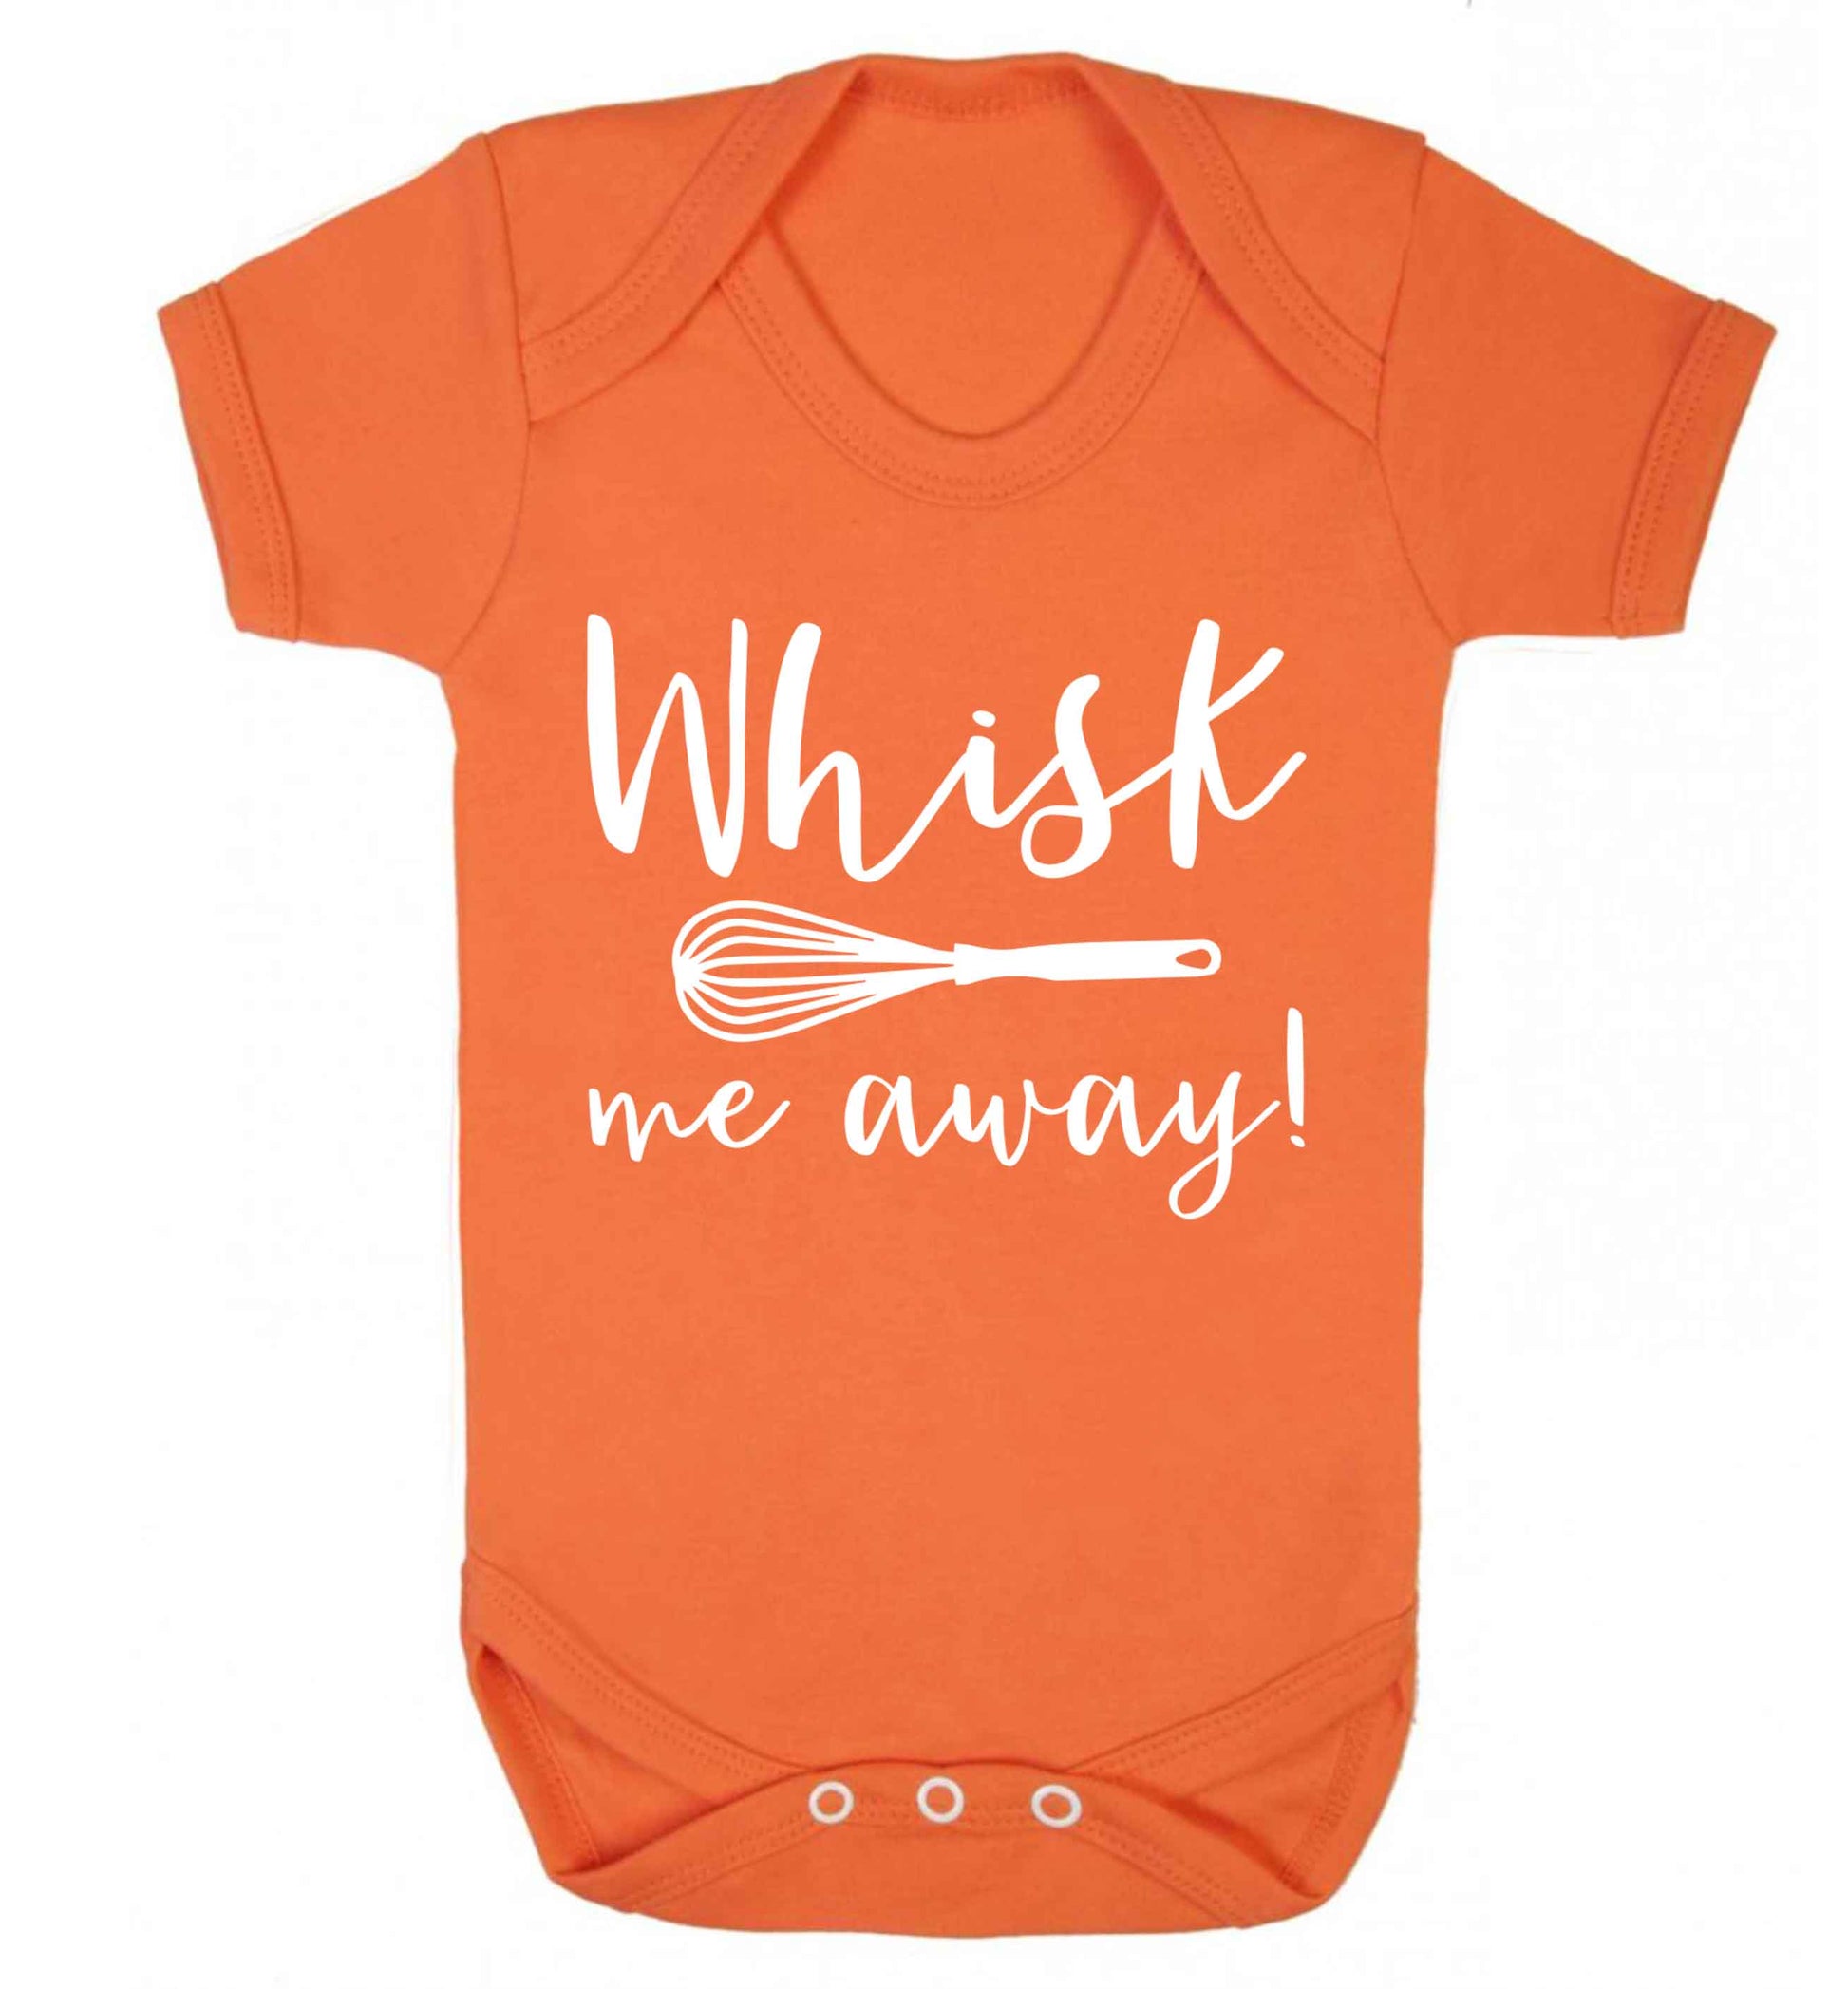 Whisk me away Baby Vest orange 18-24 months